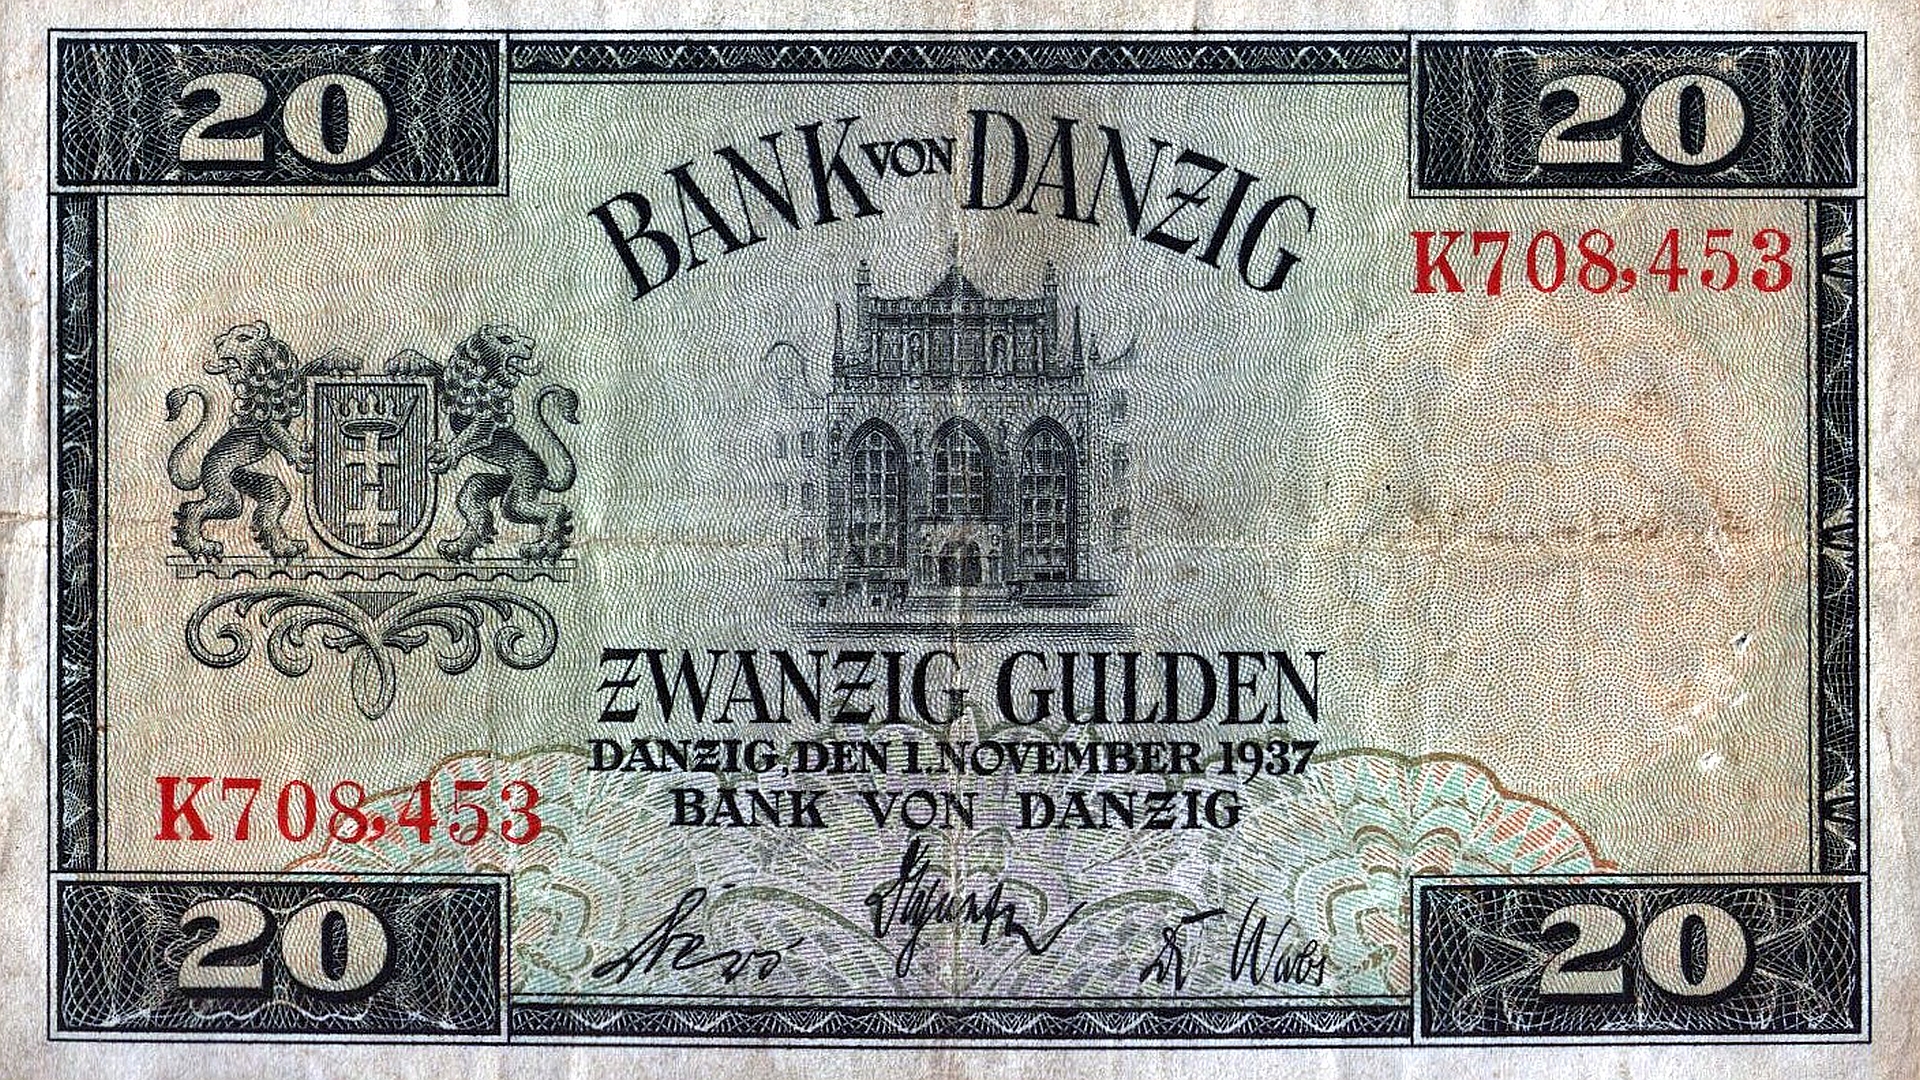 Man Made Danzig gulden HD Wallpaper | Background Image